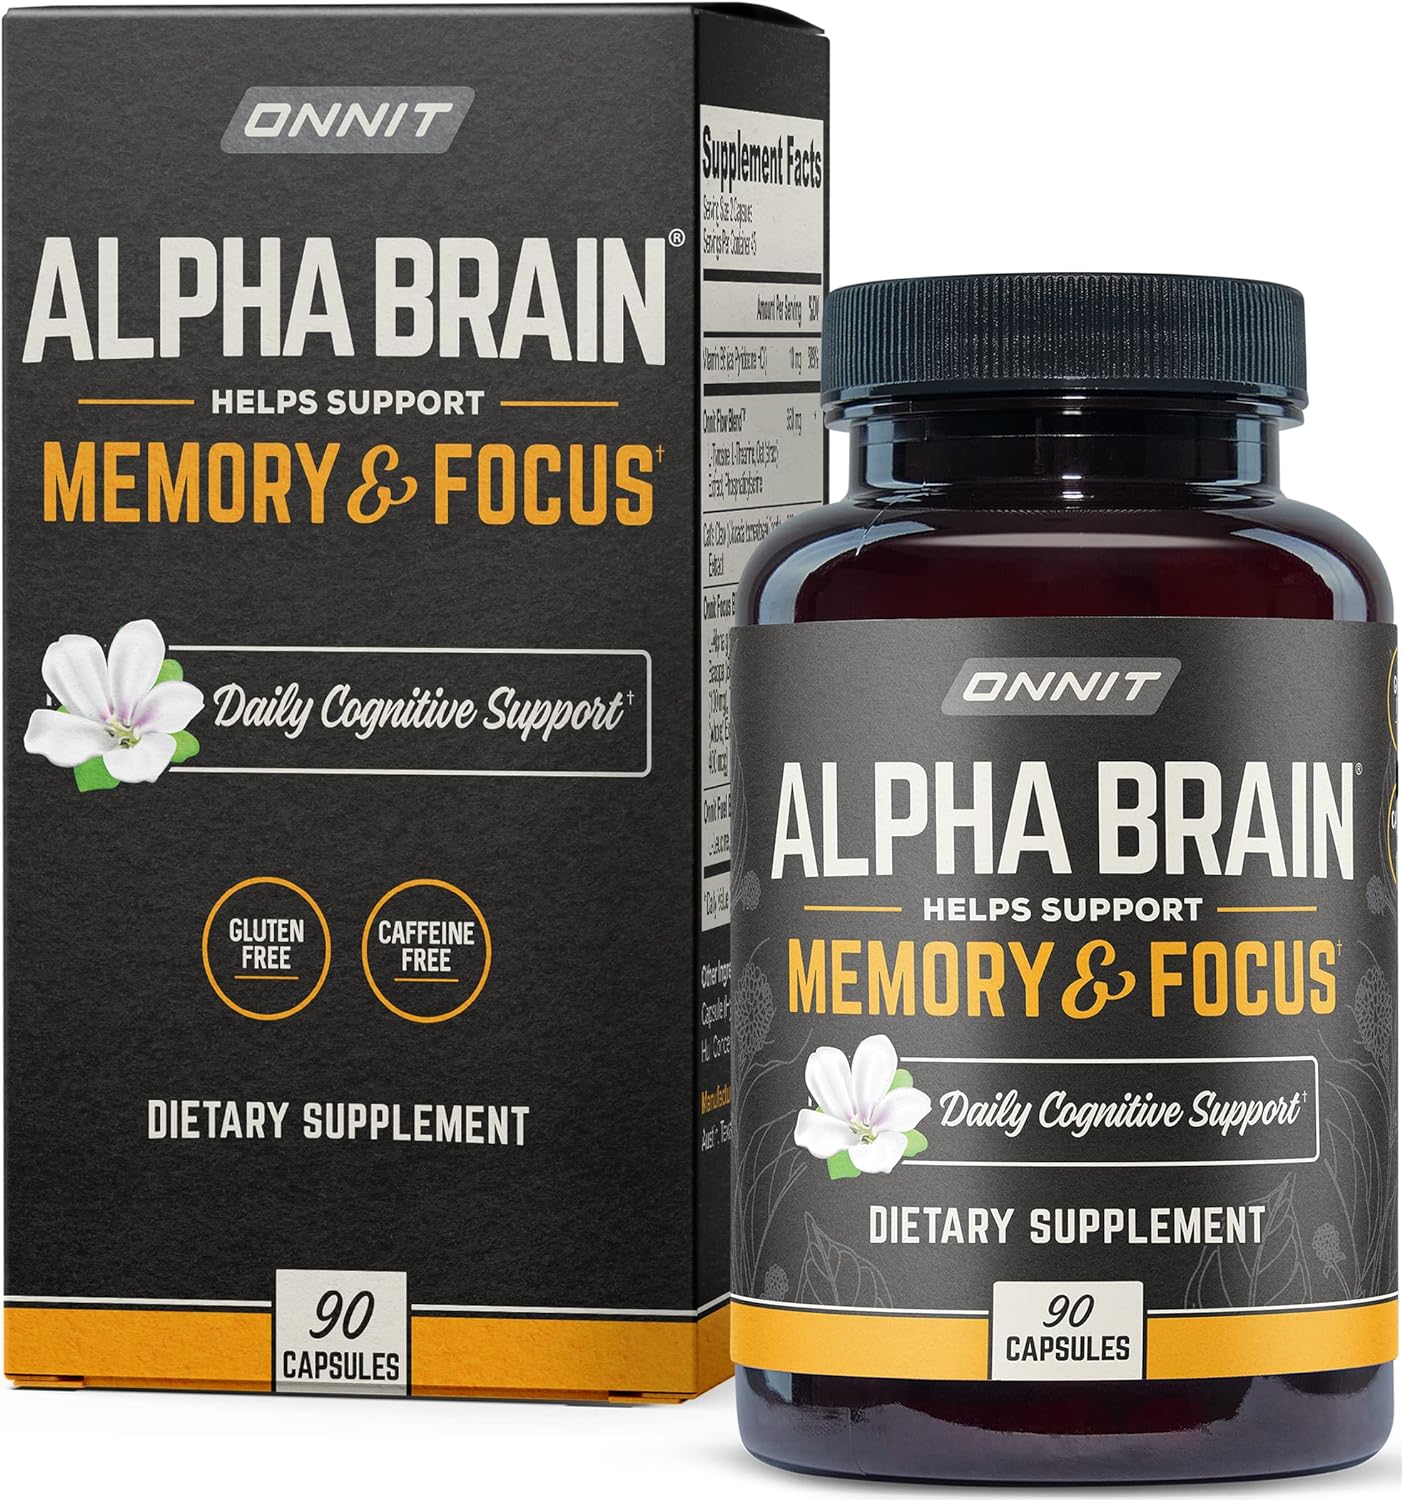 ONNIT Alpha Brain Premium Supplement Review